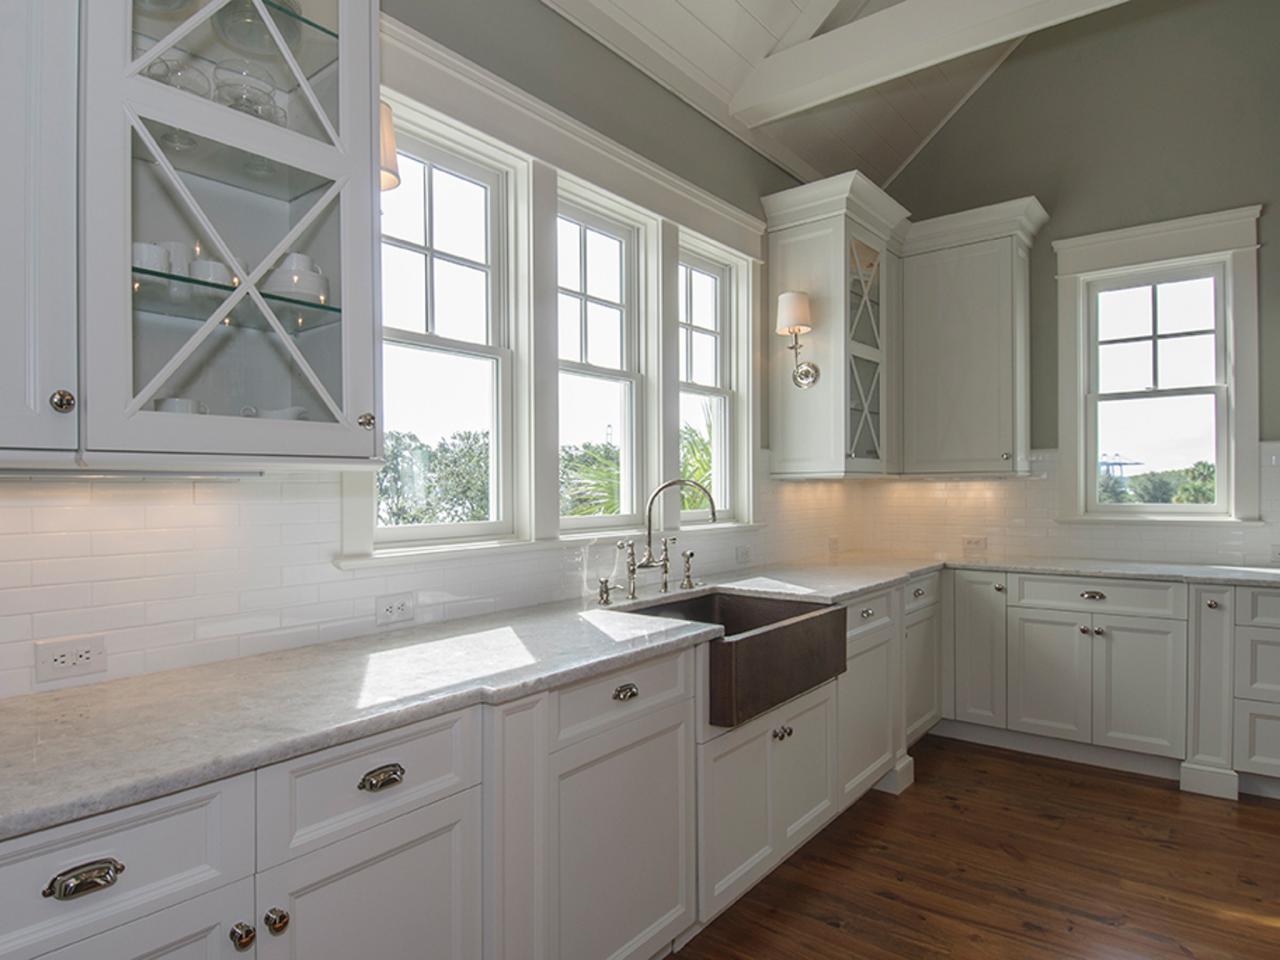 RS_Bryan-Reiss-white-gray-transitional-kitchen-cabinets_h.jpg.rend.hgtvcom.1280.960.jpeg